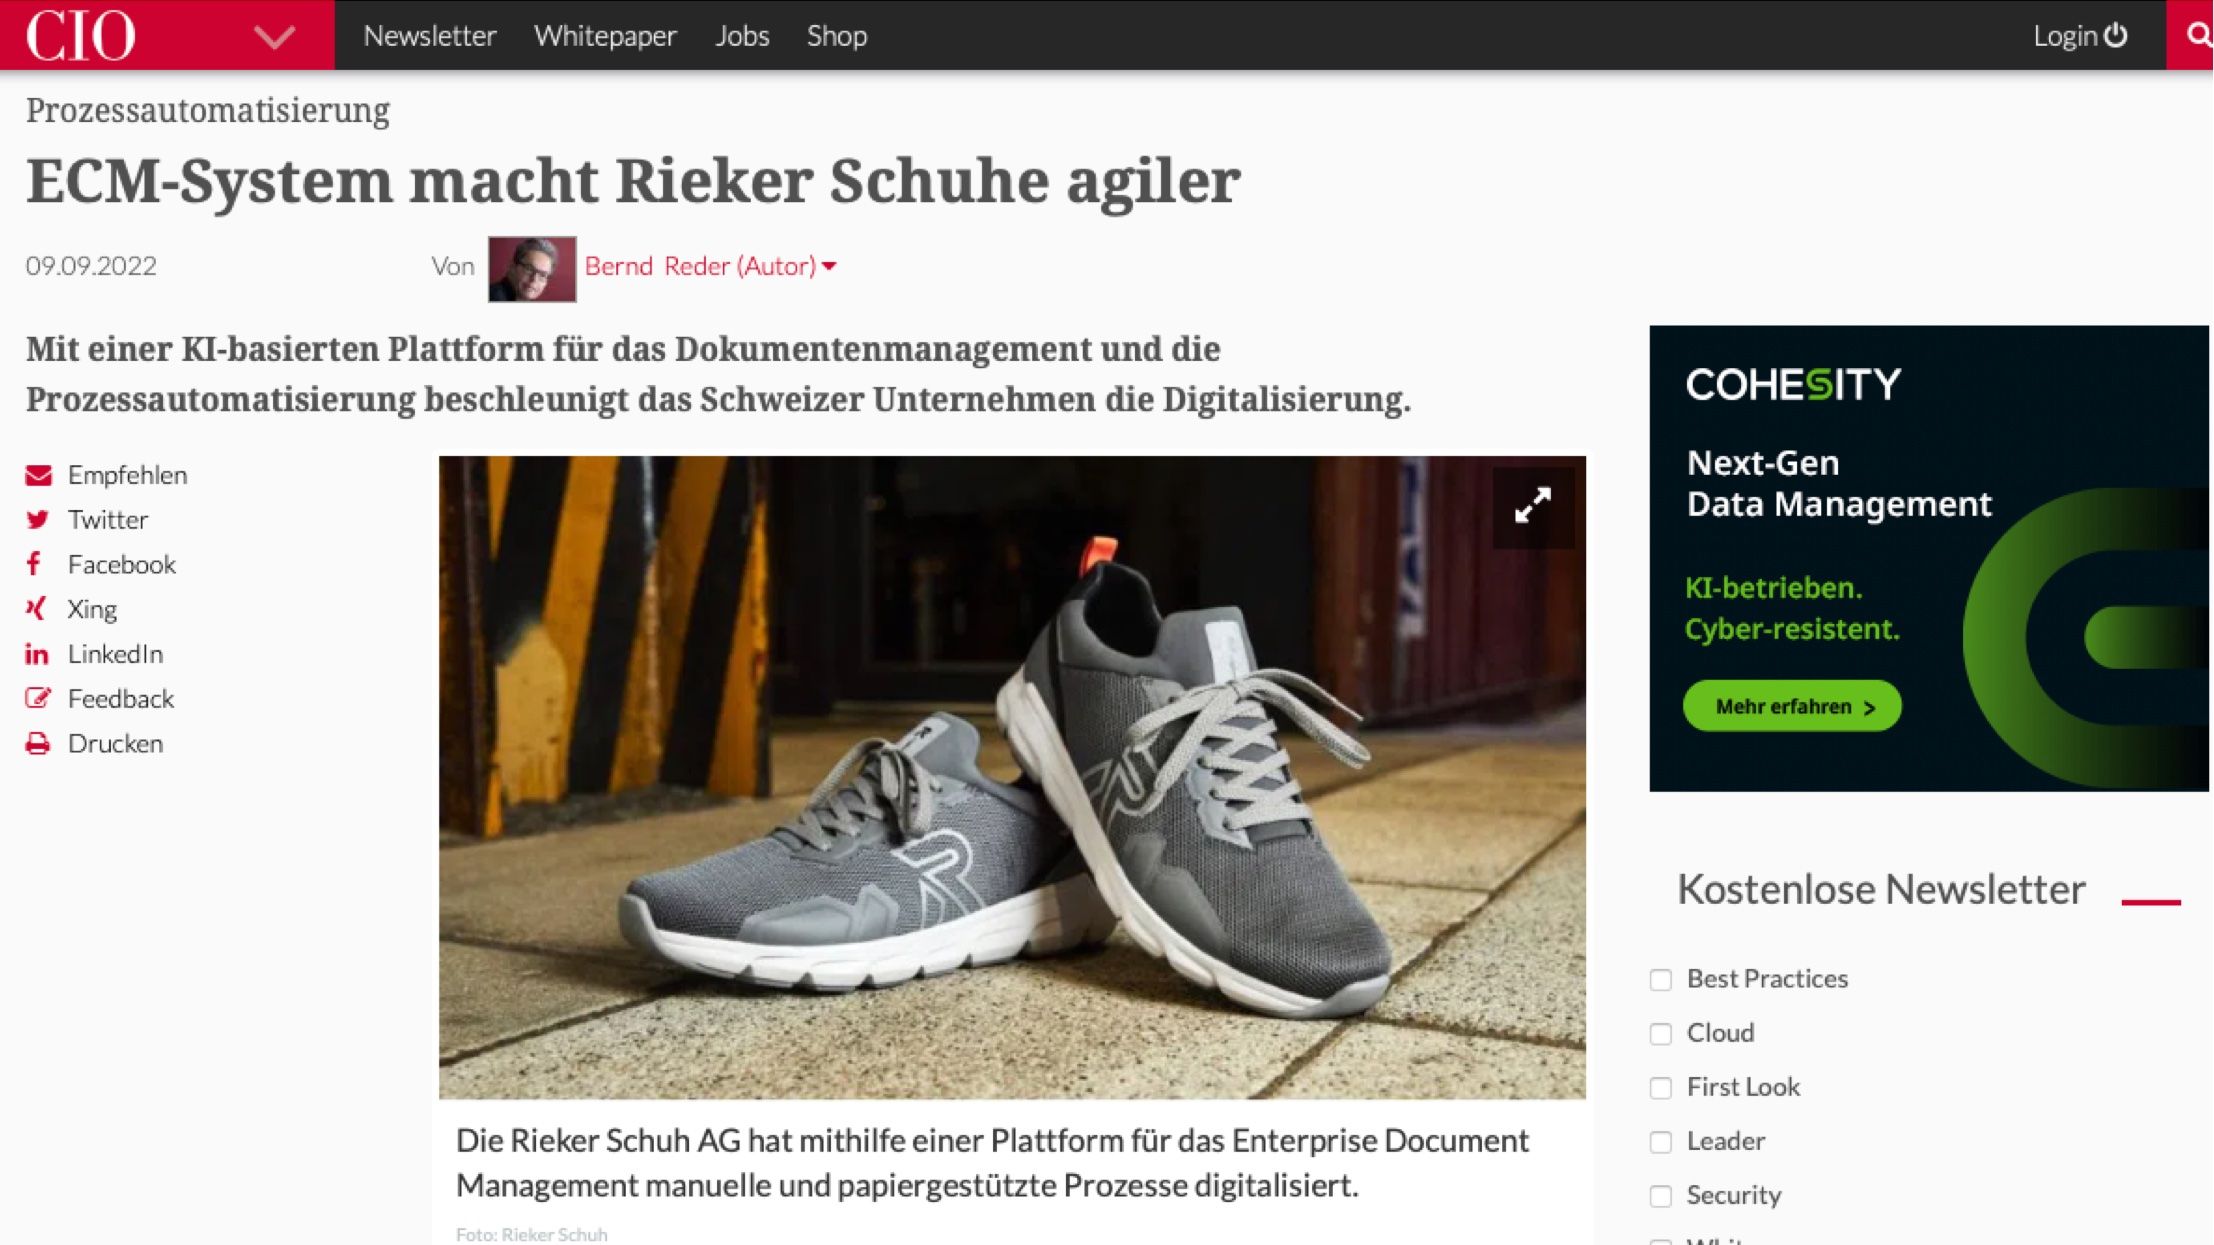 Artikel "ECM-System macht Rieker-Schuhe agiler" im CIO Magazin